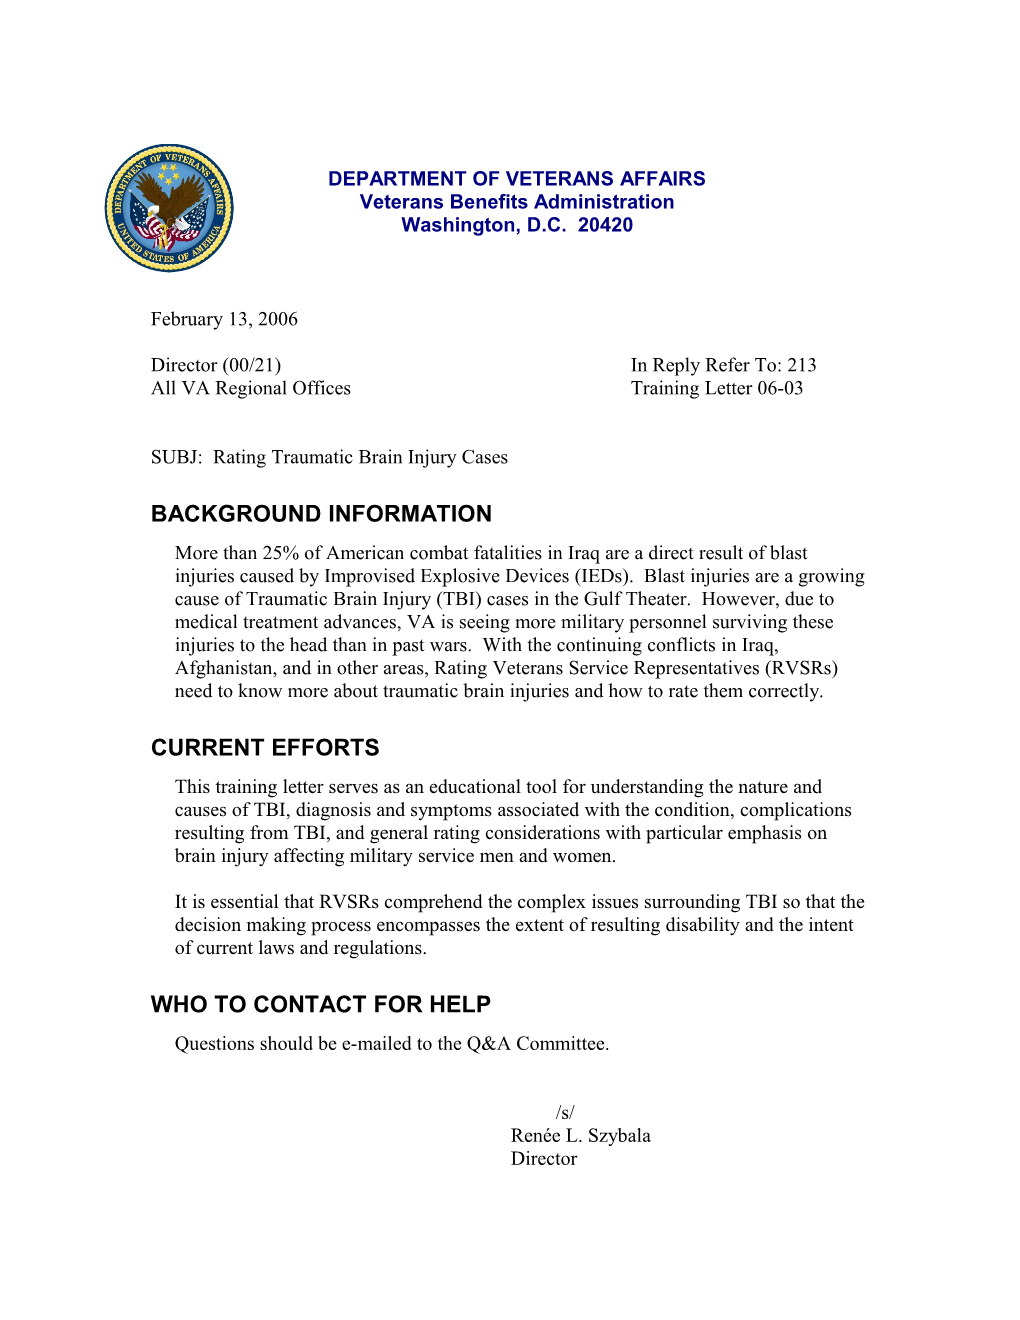 All VA Regional Offices Training Letter 06-03